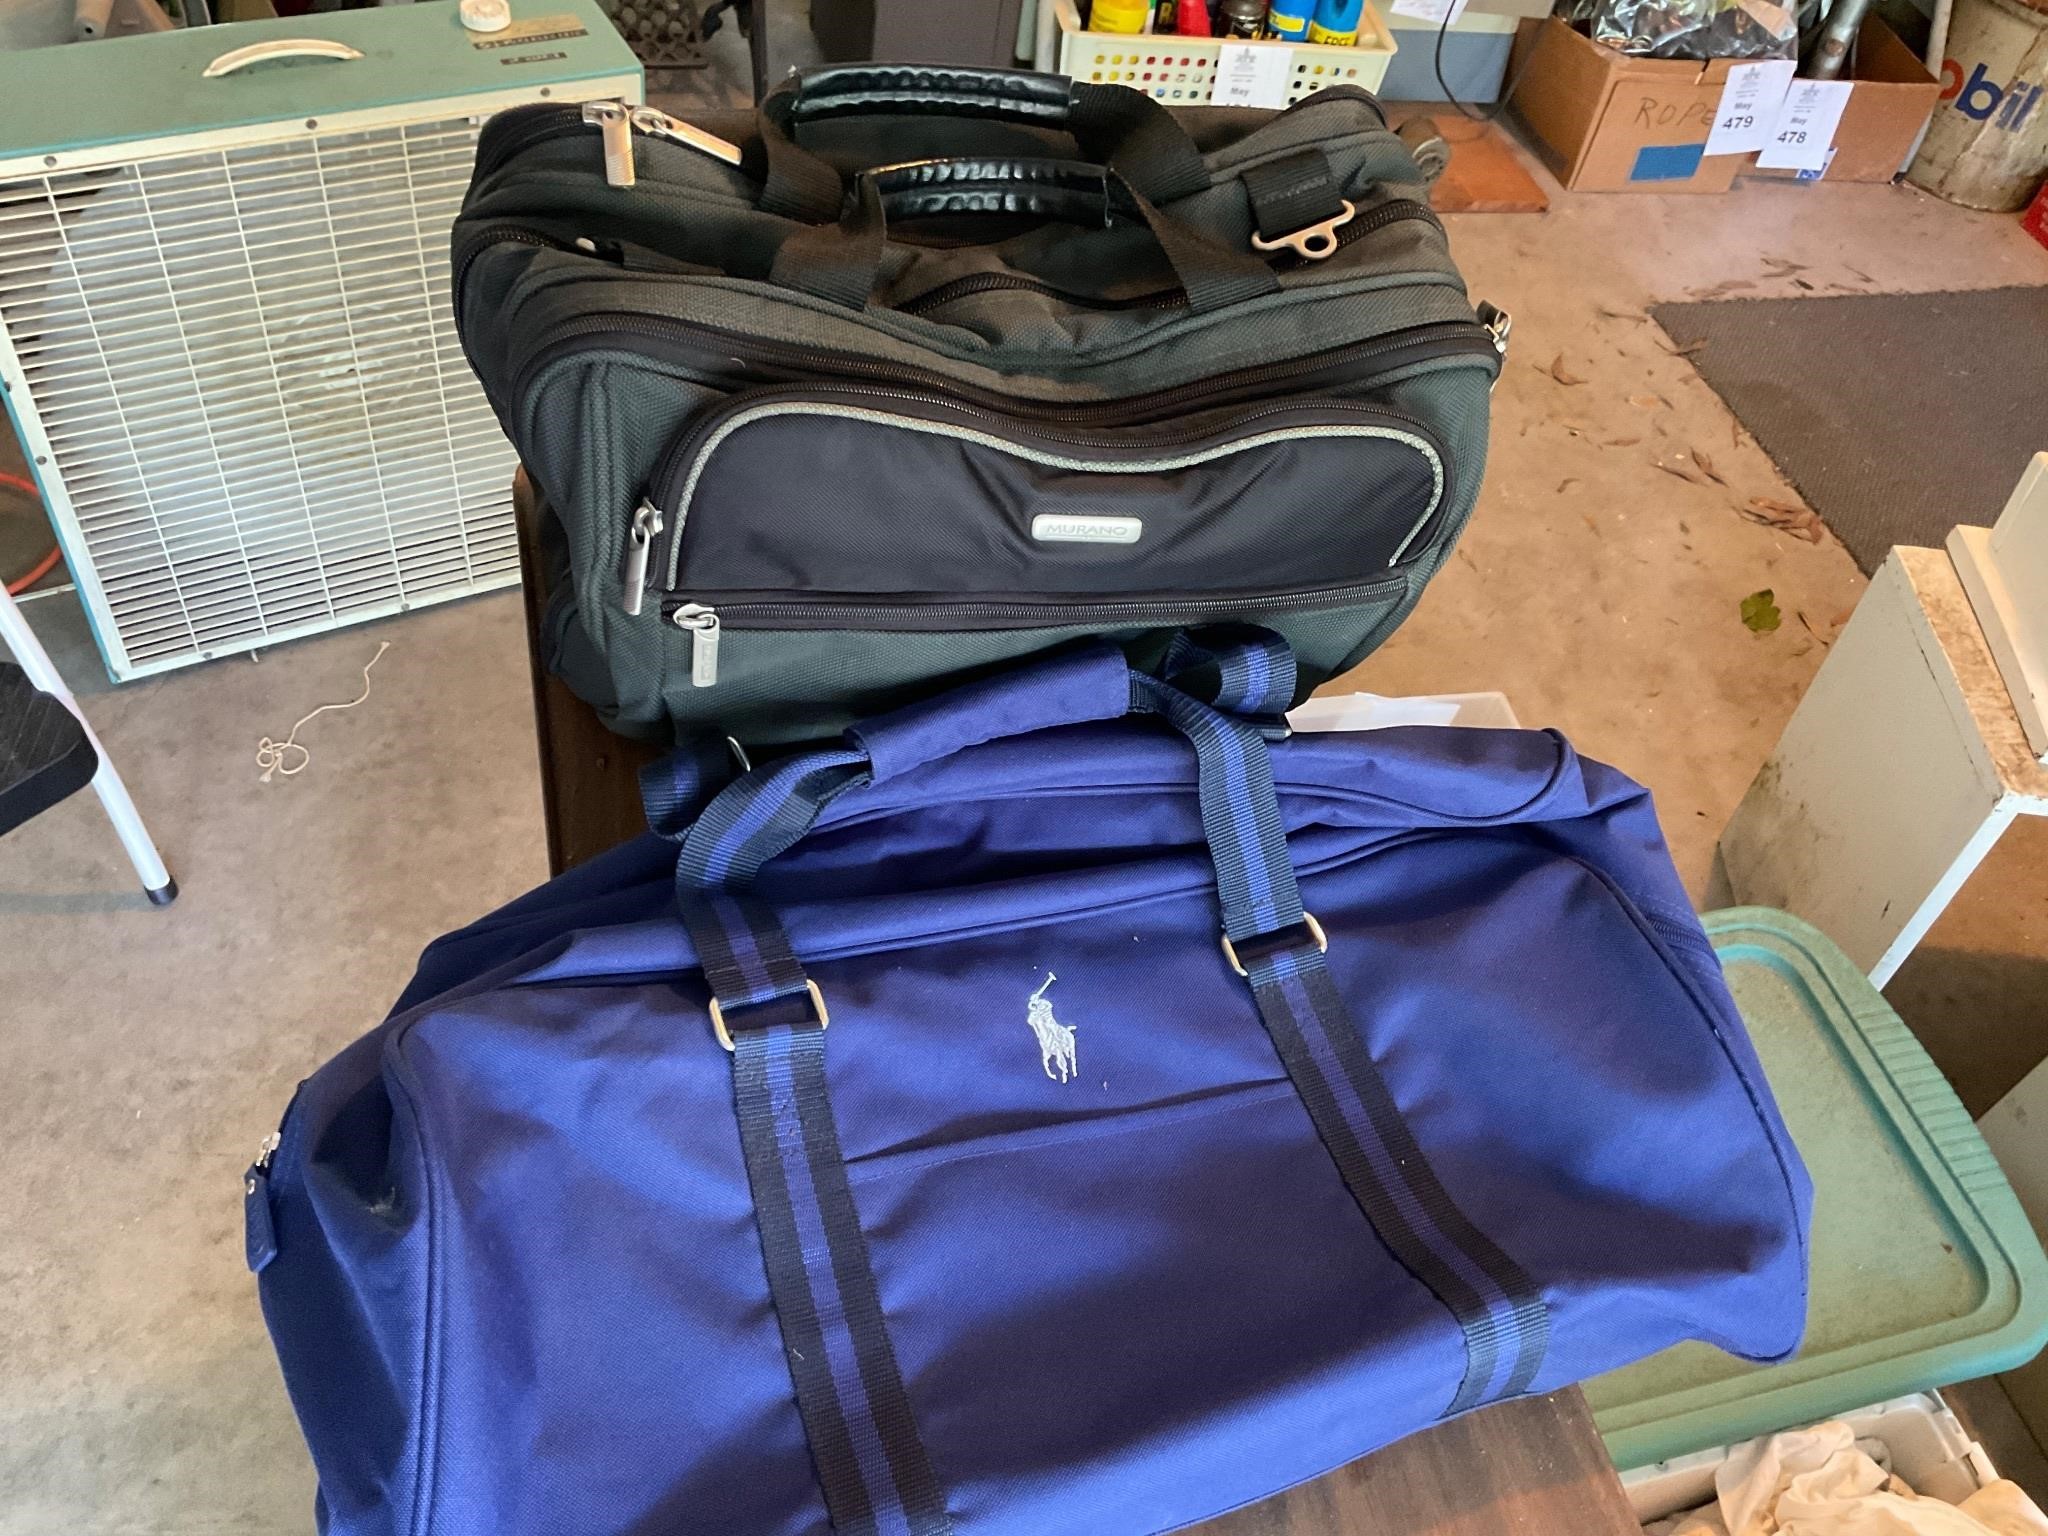 Polo (?) duffle bag & Murano Computer Travel bag